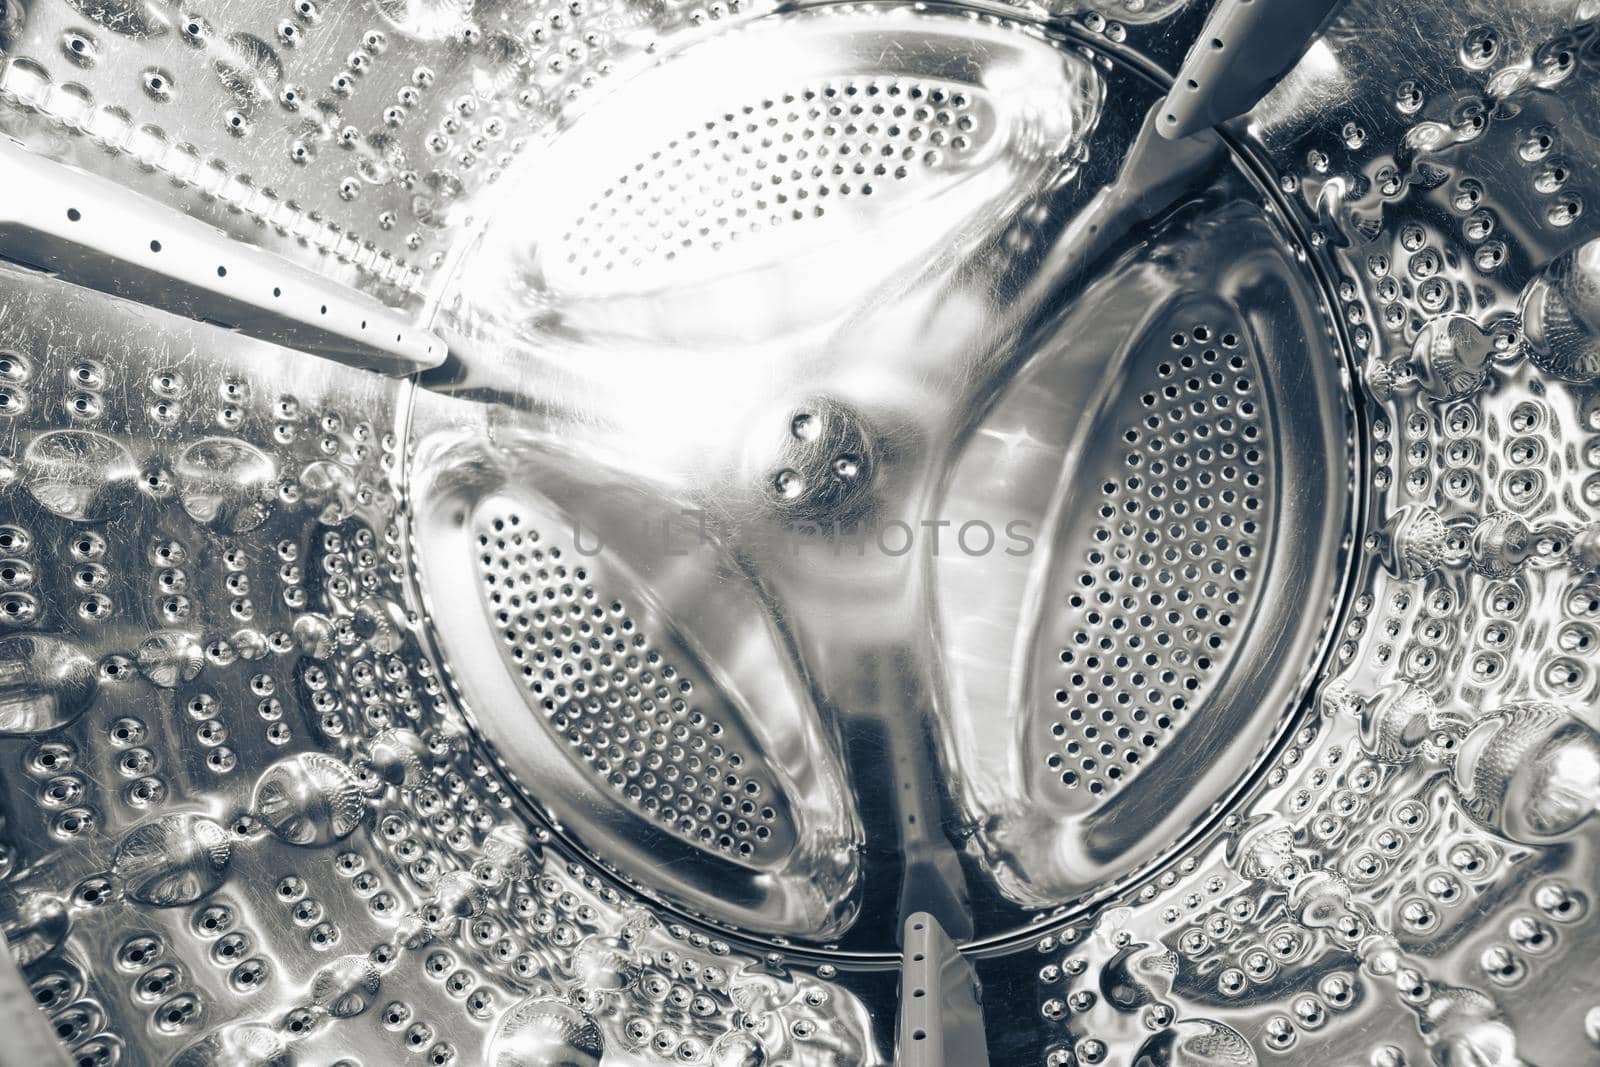 inside of a washing machine drum